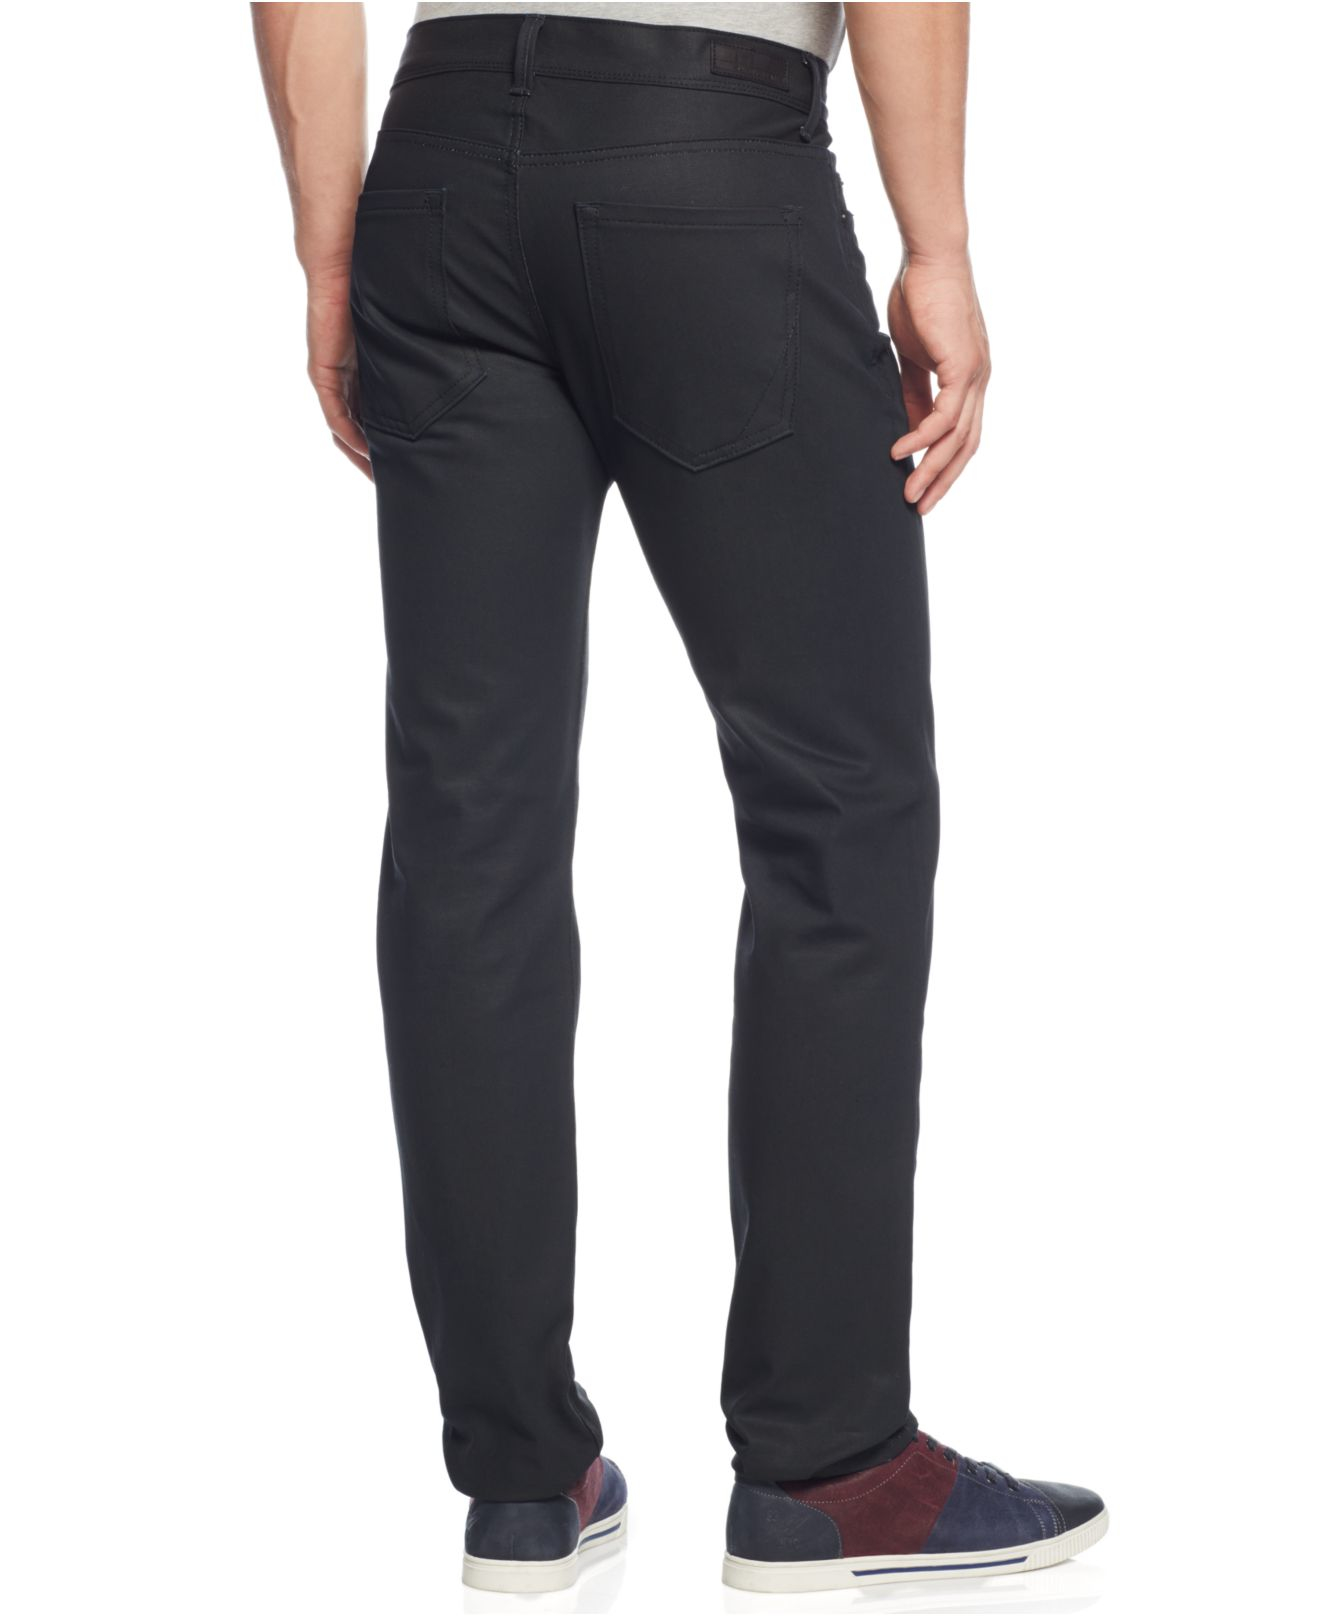 Lyst - Dkny Williamsburg Slim-fit Jeans in Black for Men